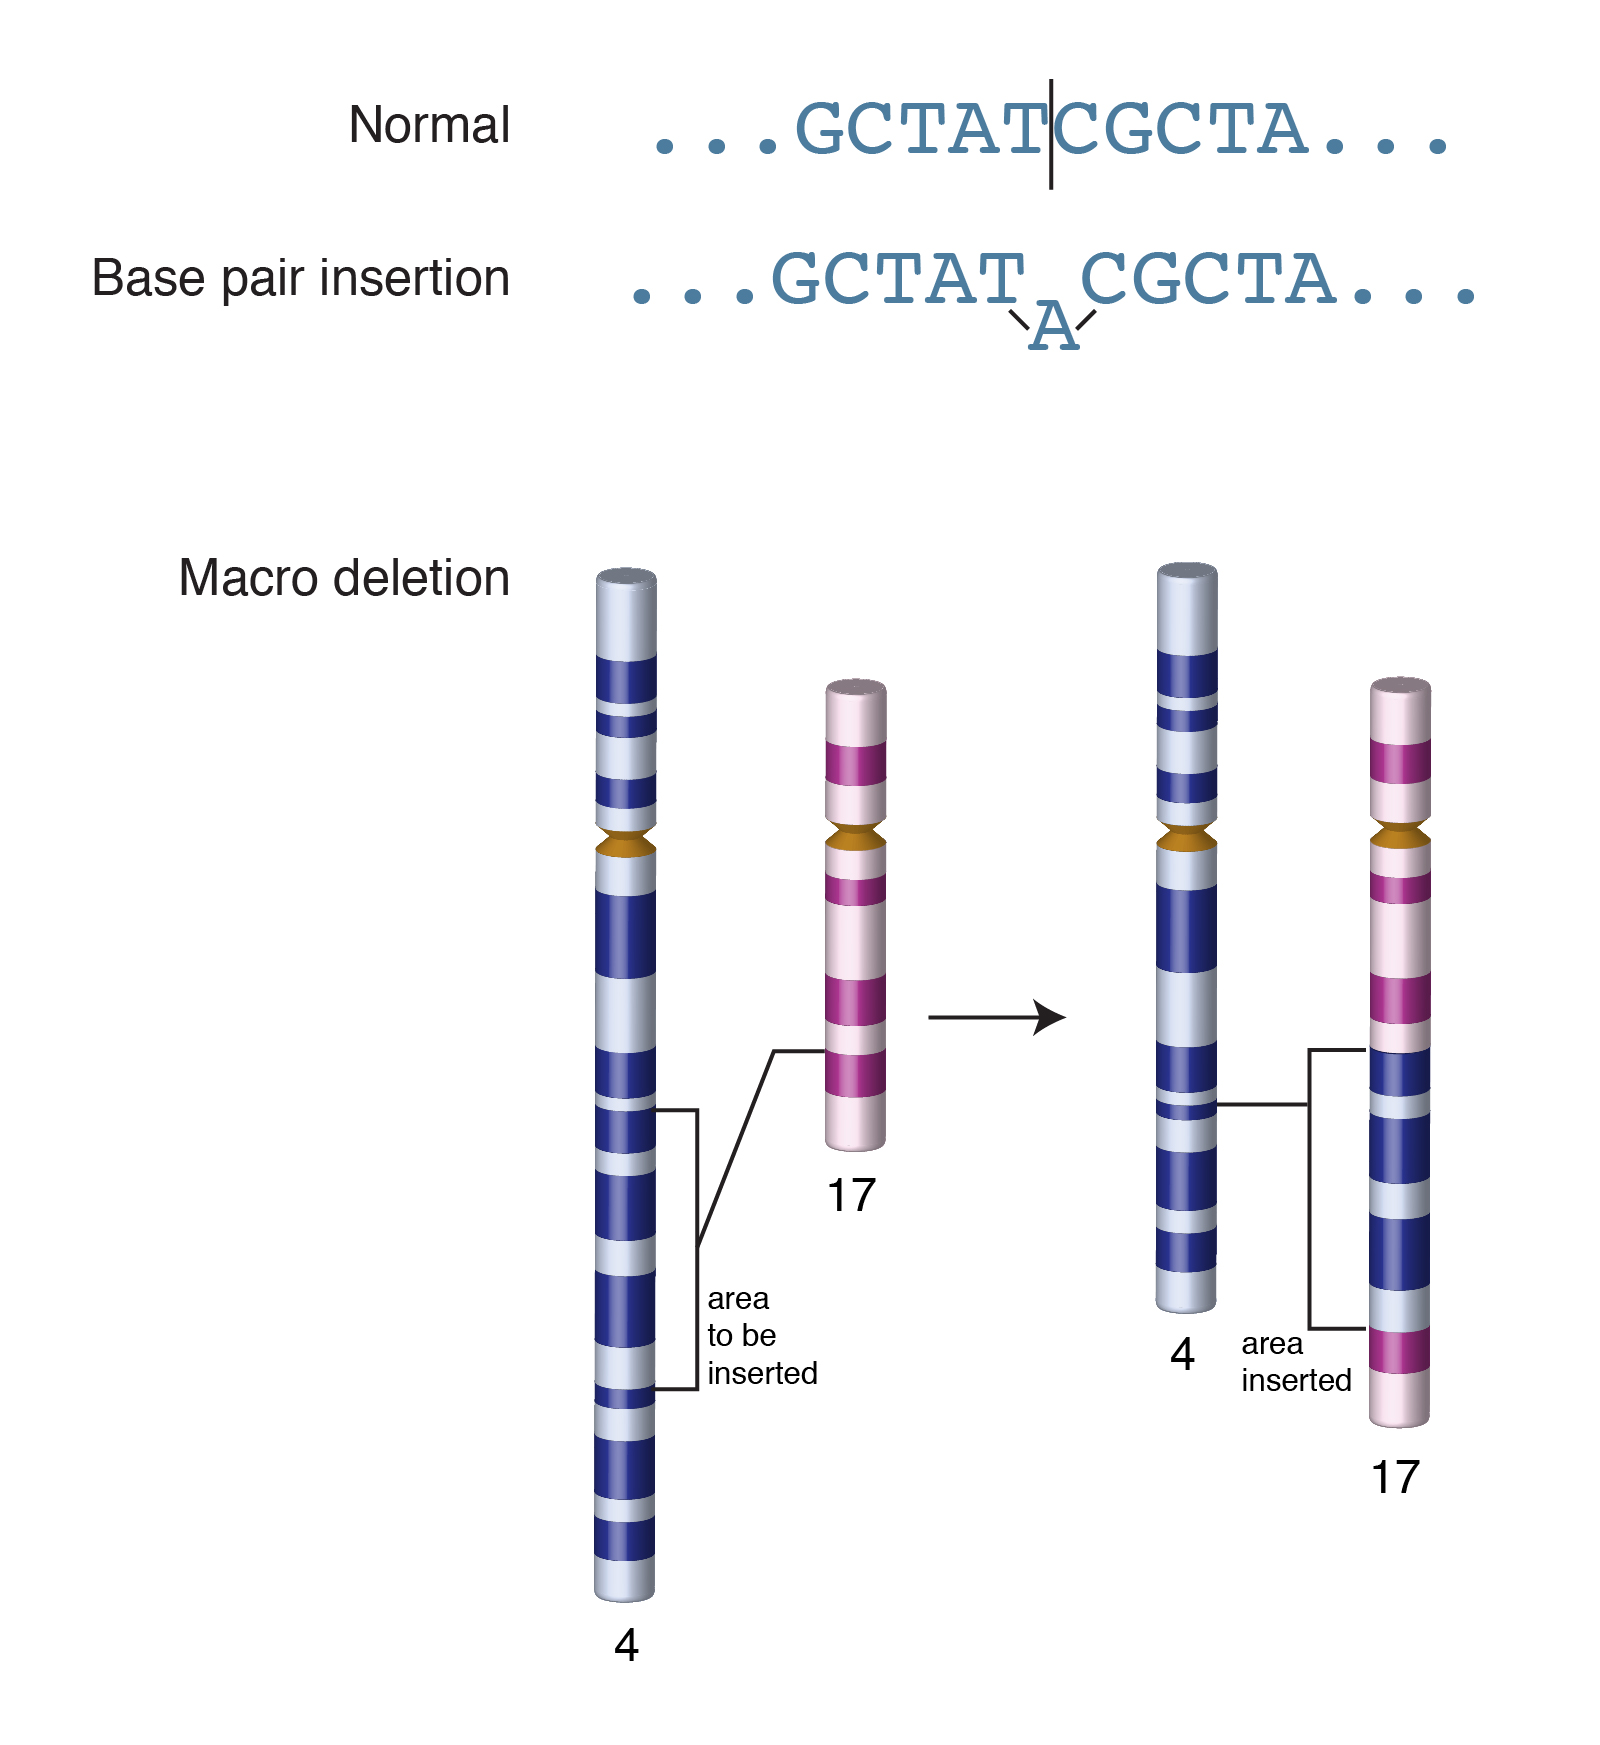 Inserting gene into genome